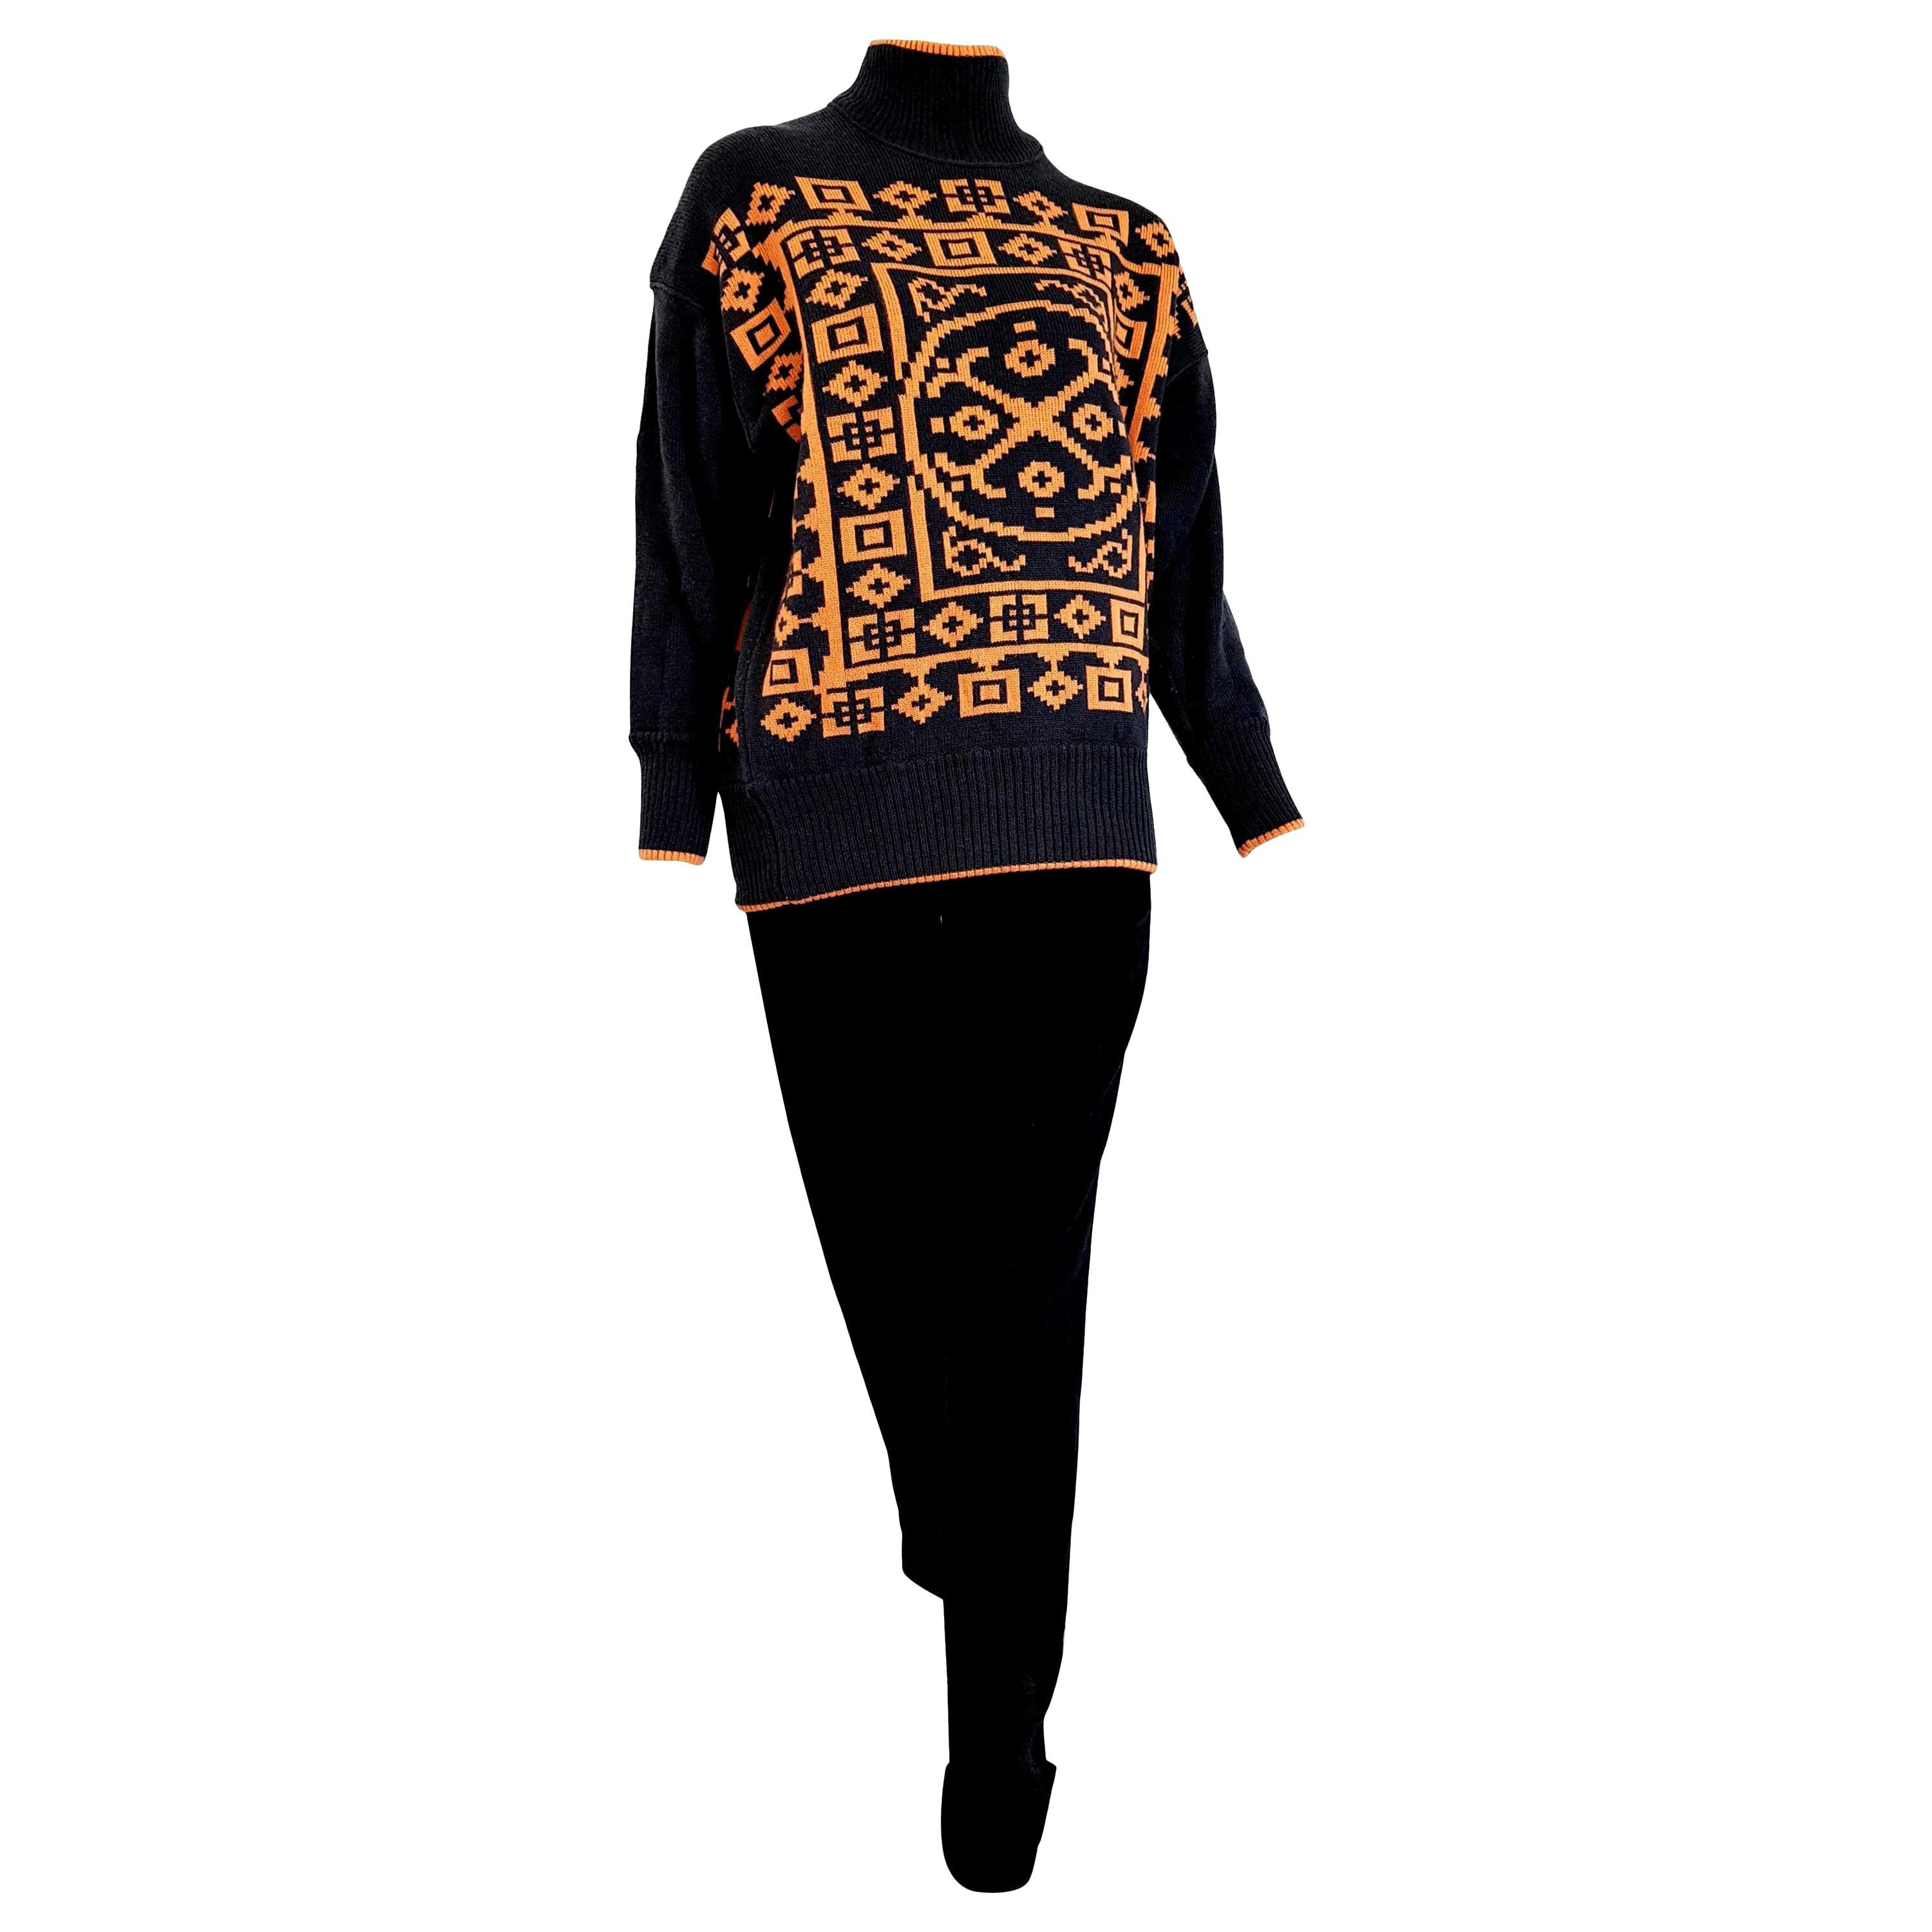 Claude MONTANA "New" Sweater Maya Design Single Piece Black Wool Pants - Unworn For Sale